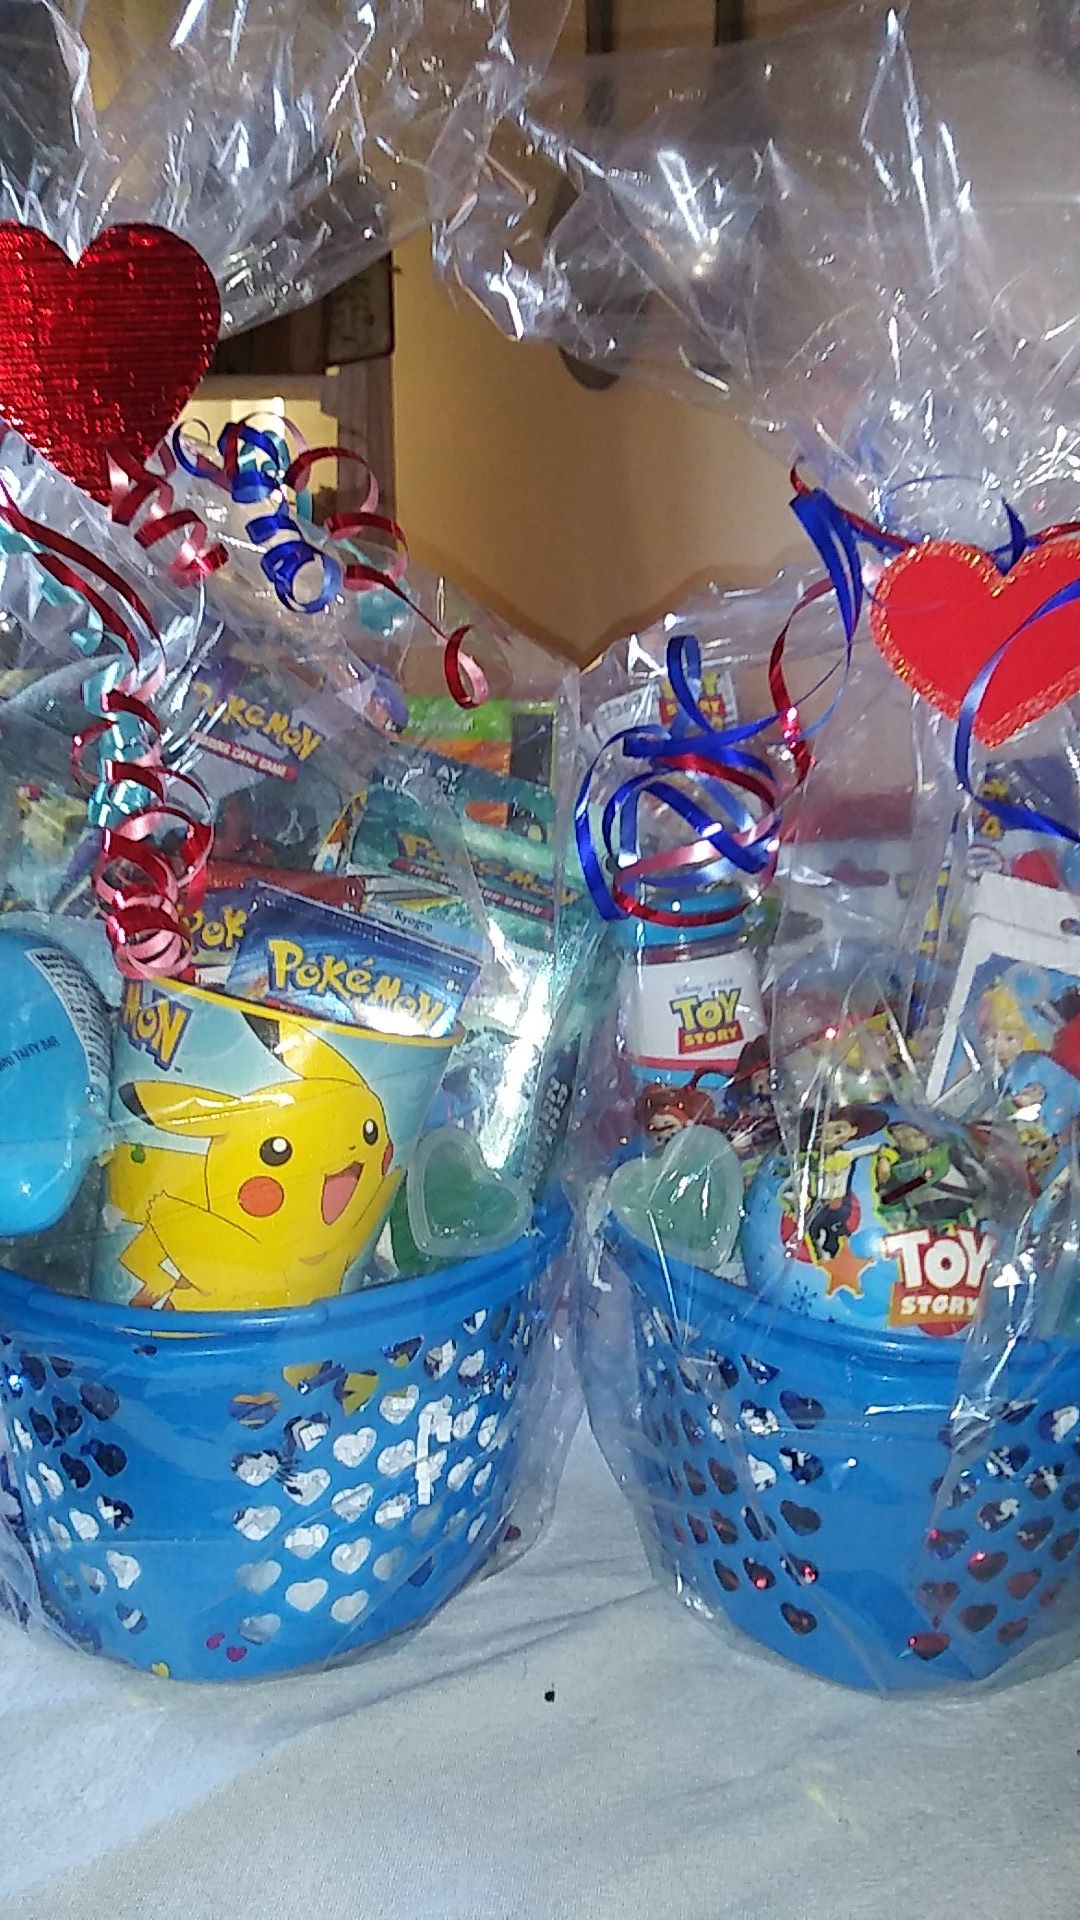 Pokemon and Toy Story 3 Valentine's Day gift baskets